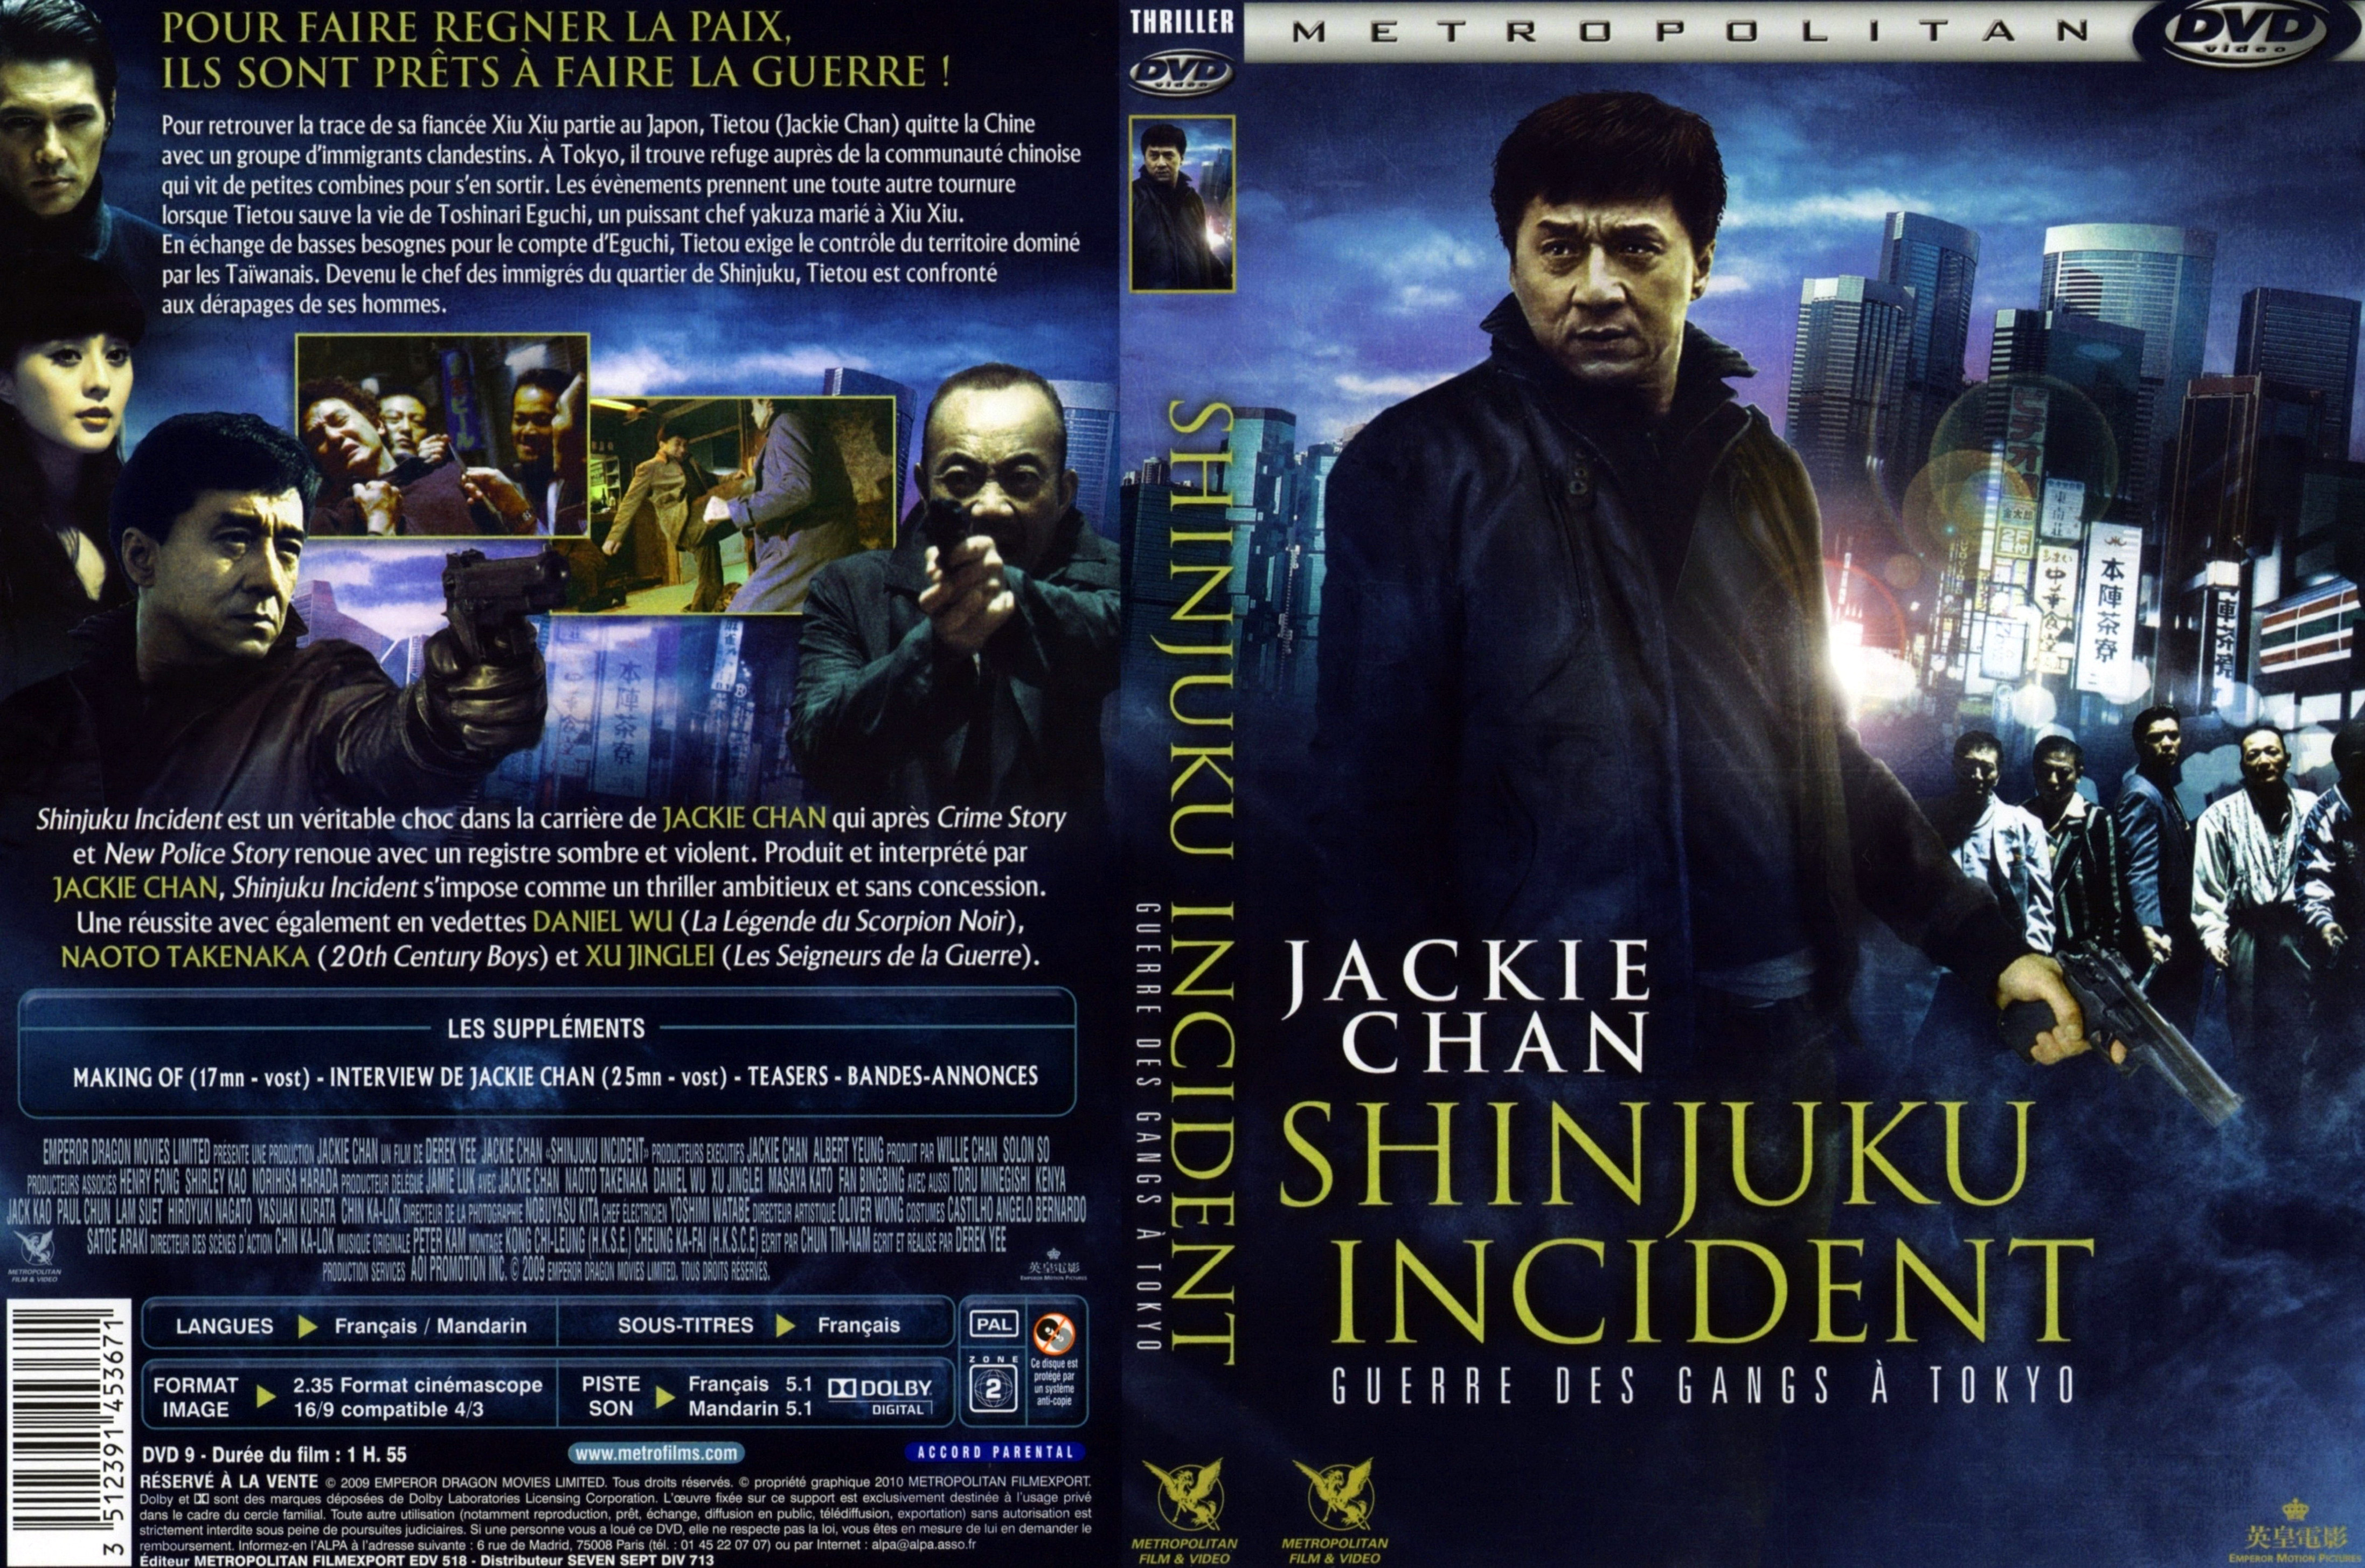 Jaquette DVD Shinjuku incident